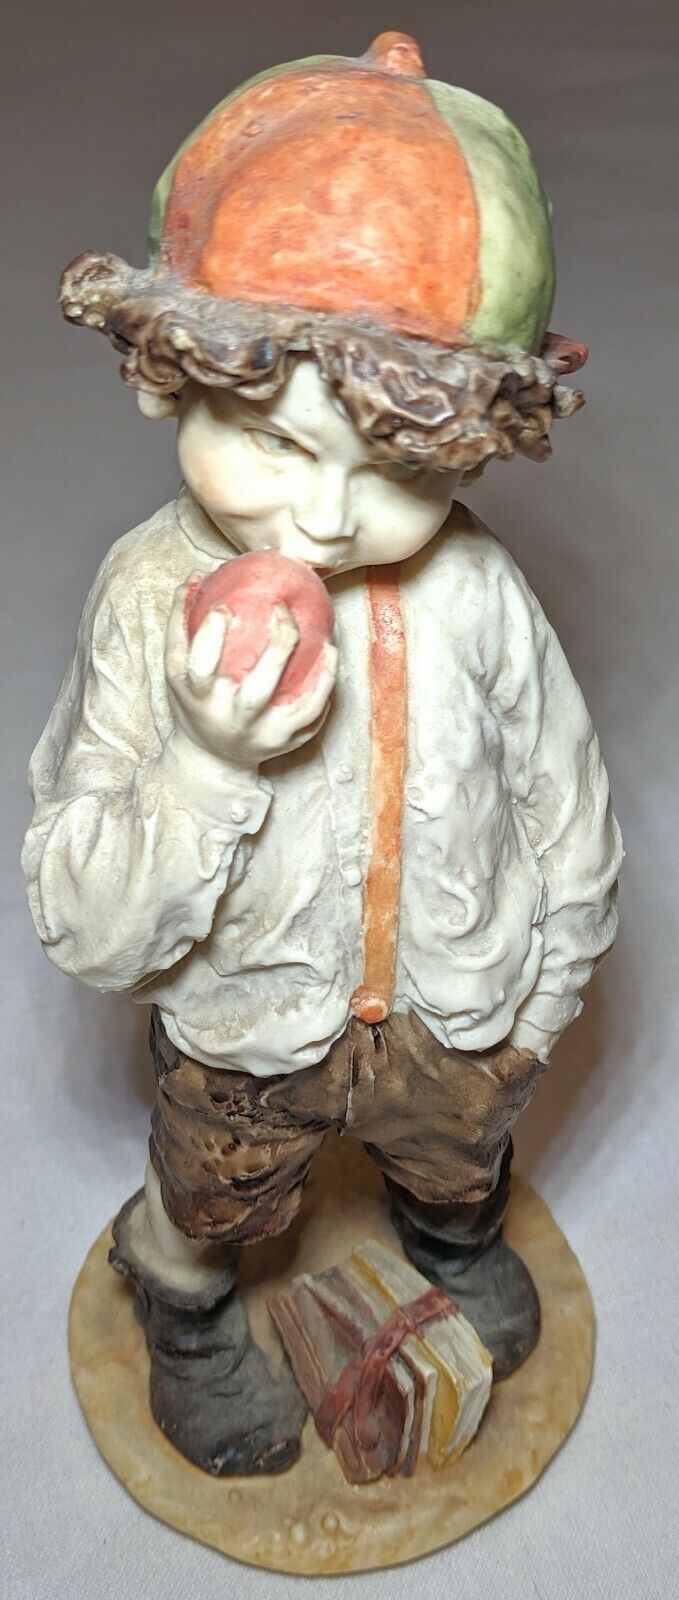 Duncan Royale School Boy Eating Apple Figurine